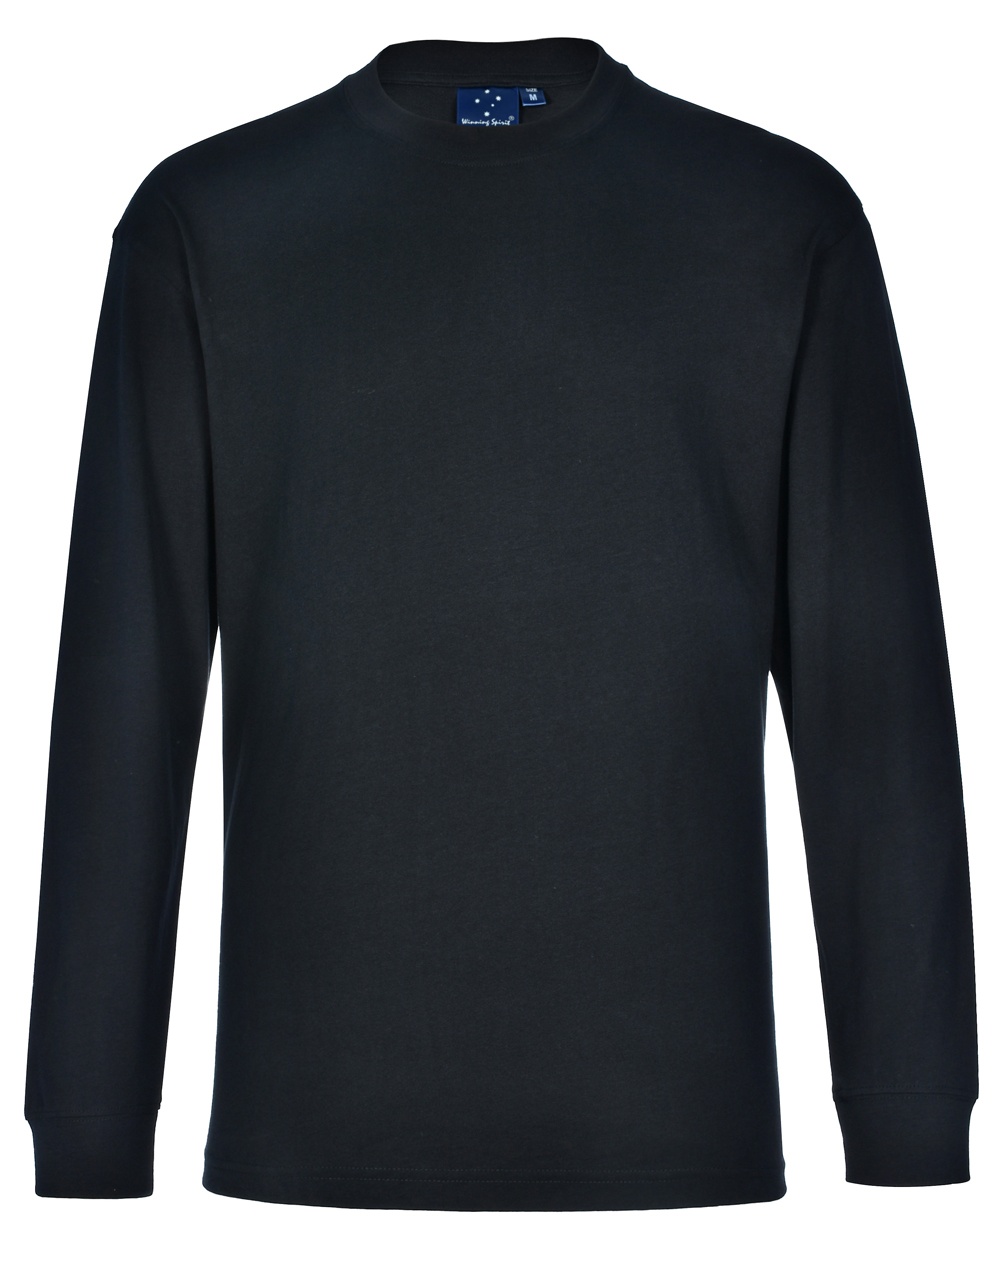 Custom Made (Black) Men's London Long Sleeve Crew Neck T-Shirts Online Australia